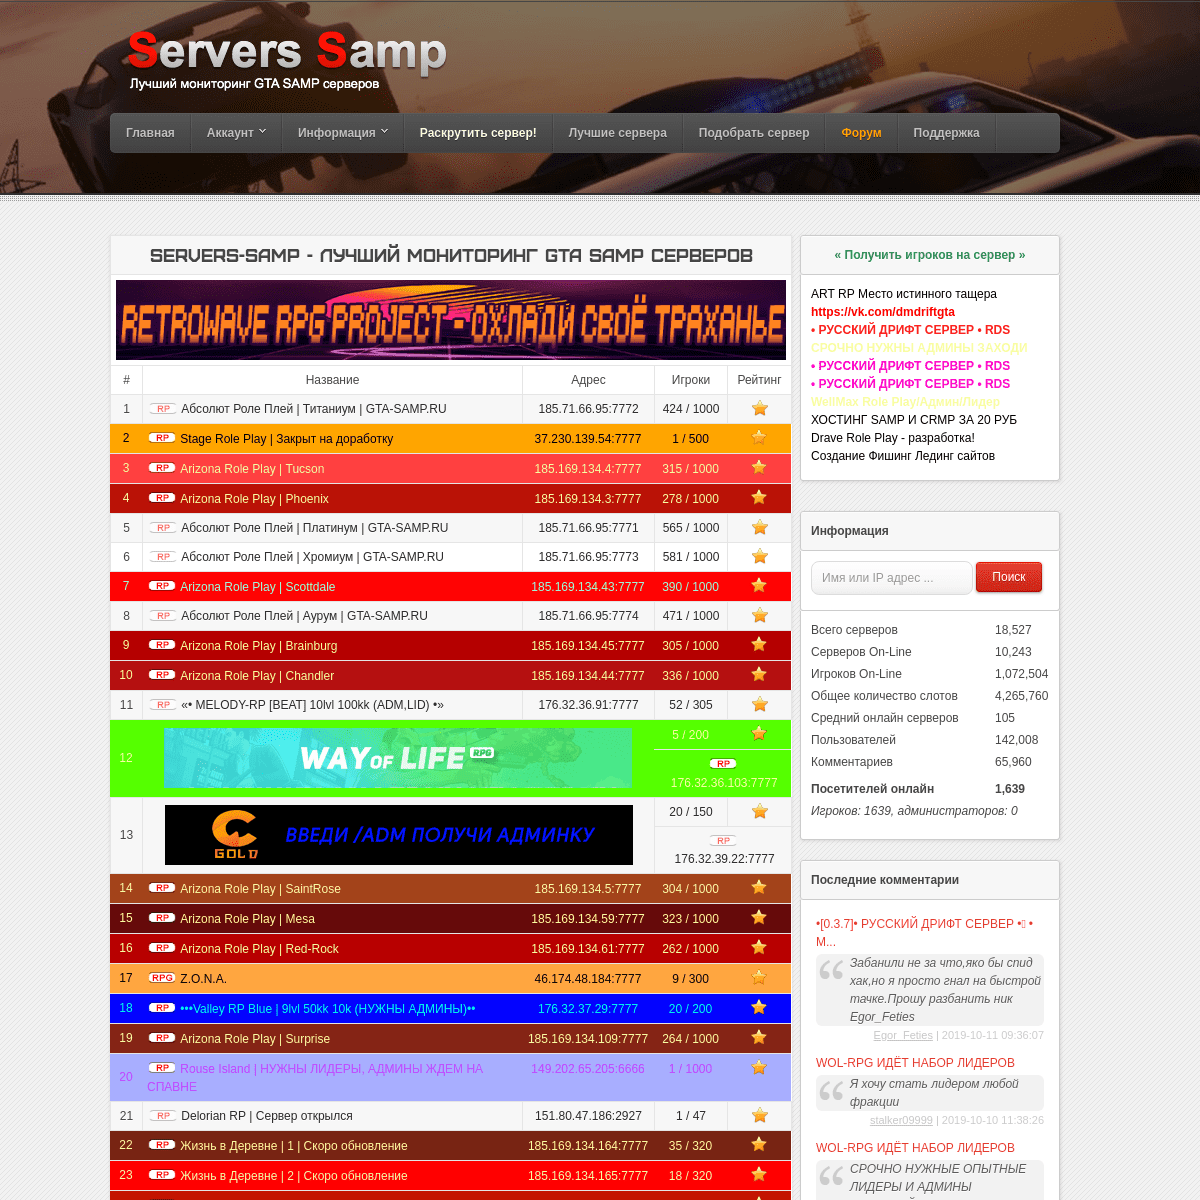 A complete backup of servers-samp.ru